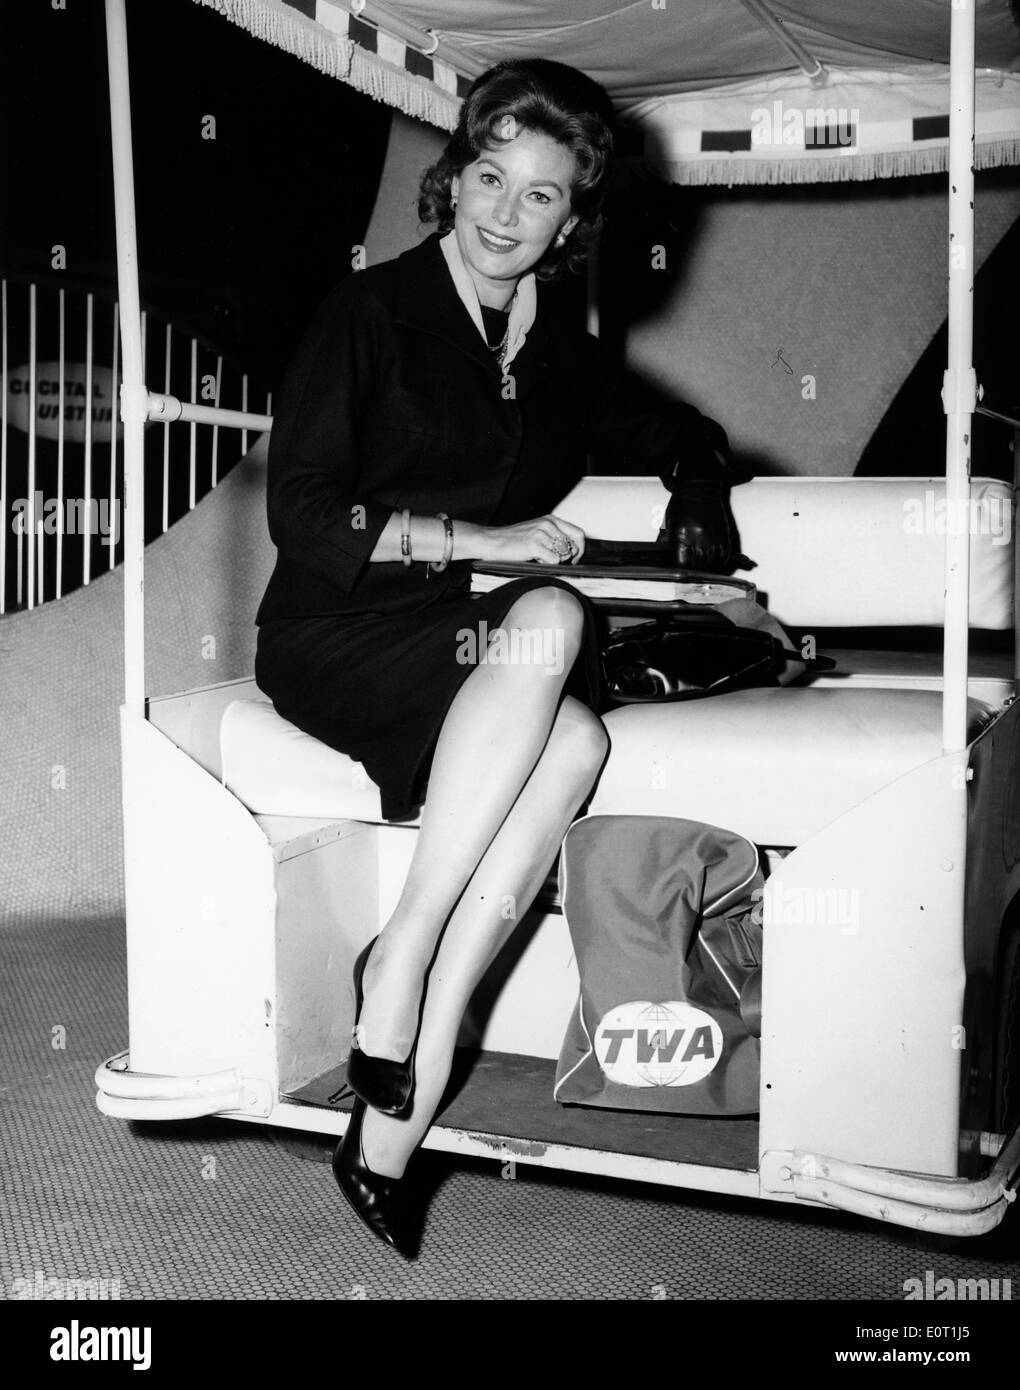 Actress Rhonda Fleming sitting at the airport Stock Photo